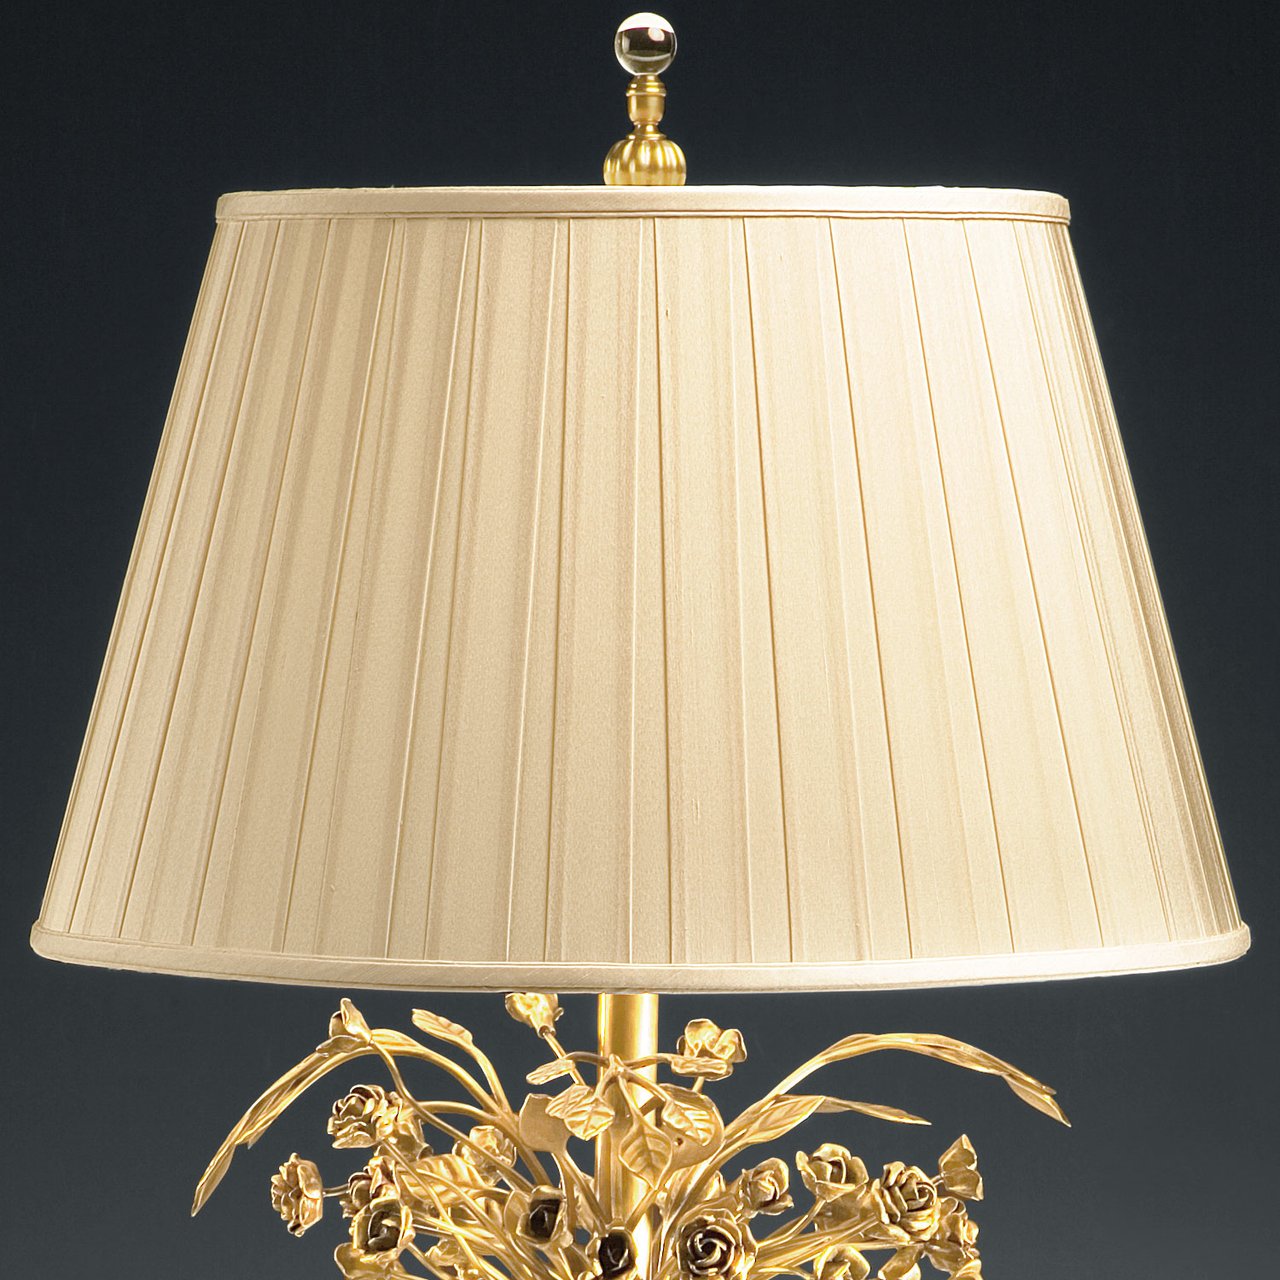 Brass vase table lamp